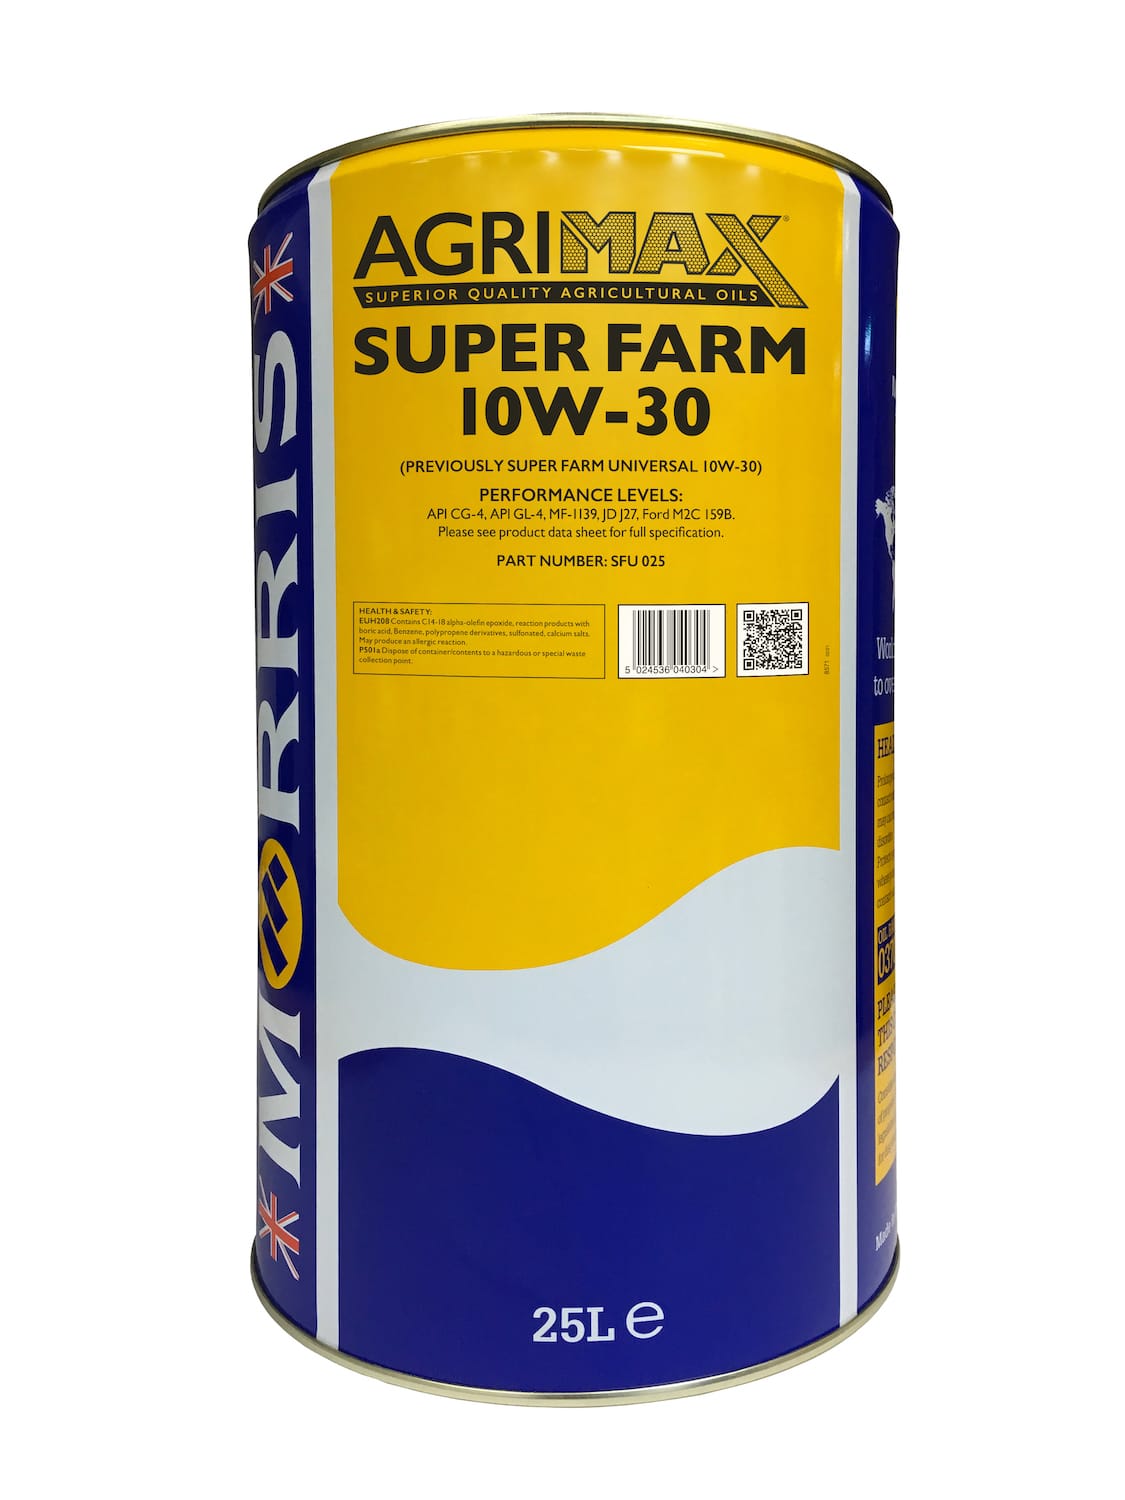 Agrimax Super Farm 10W-30 (previously called Super Farm Universal 10W-30)